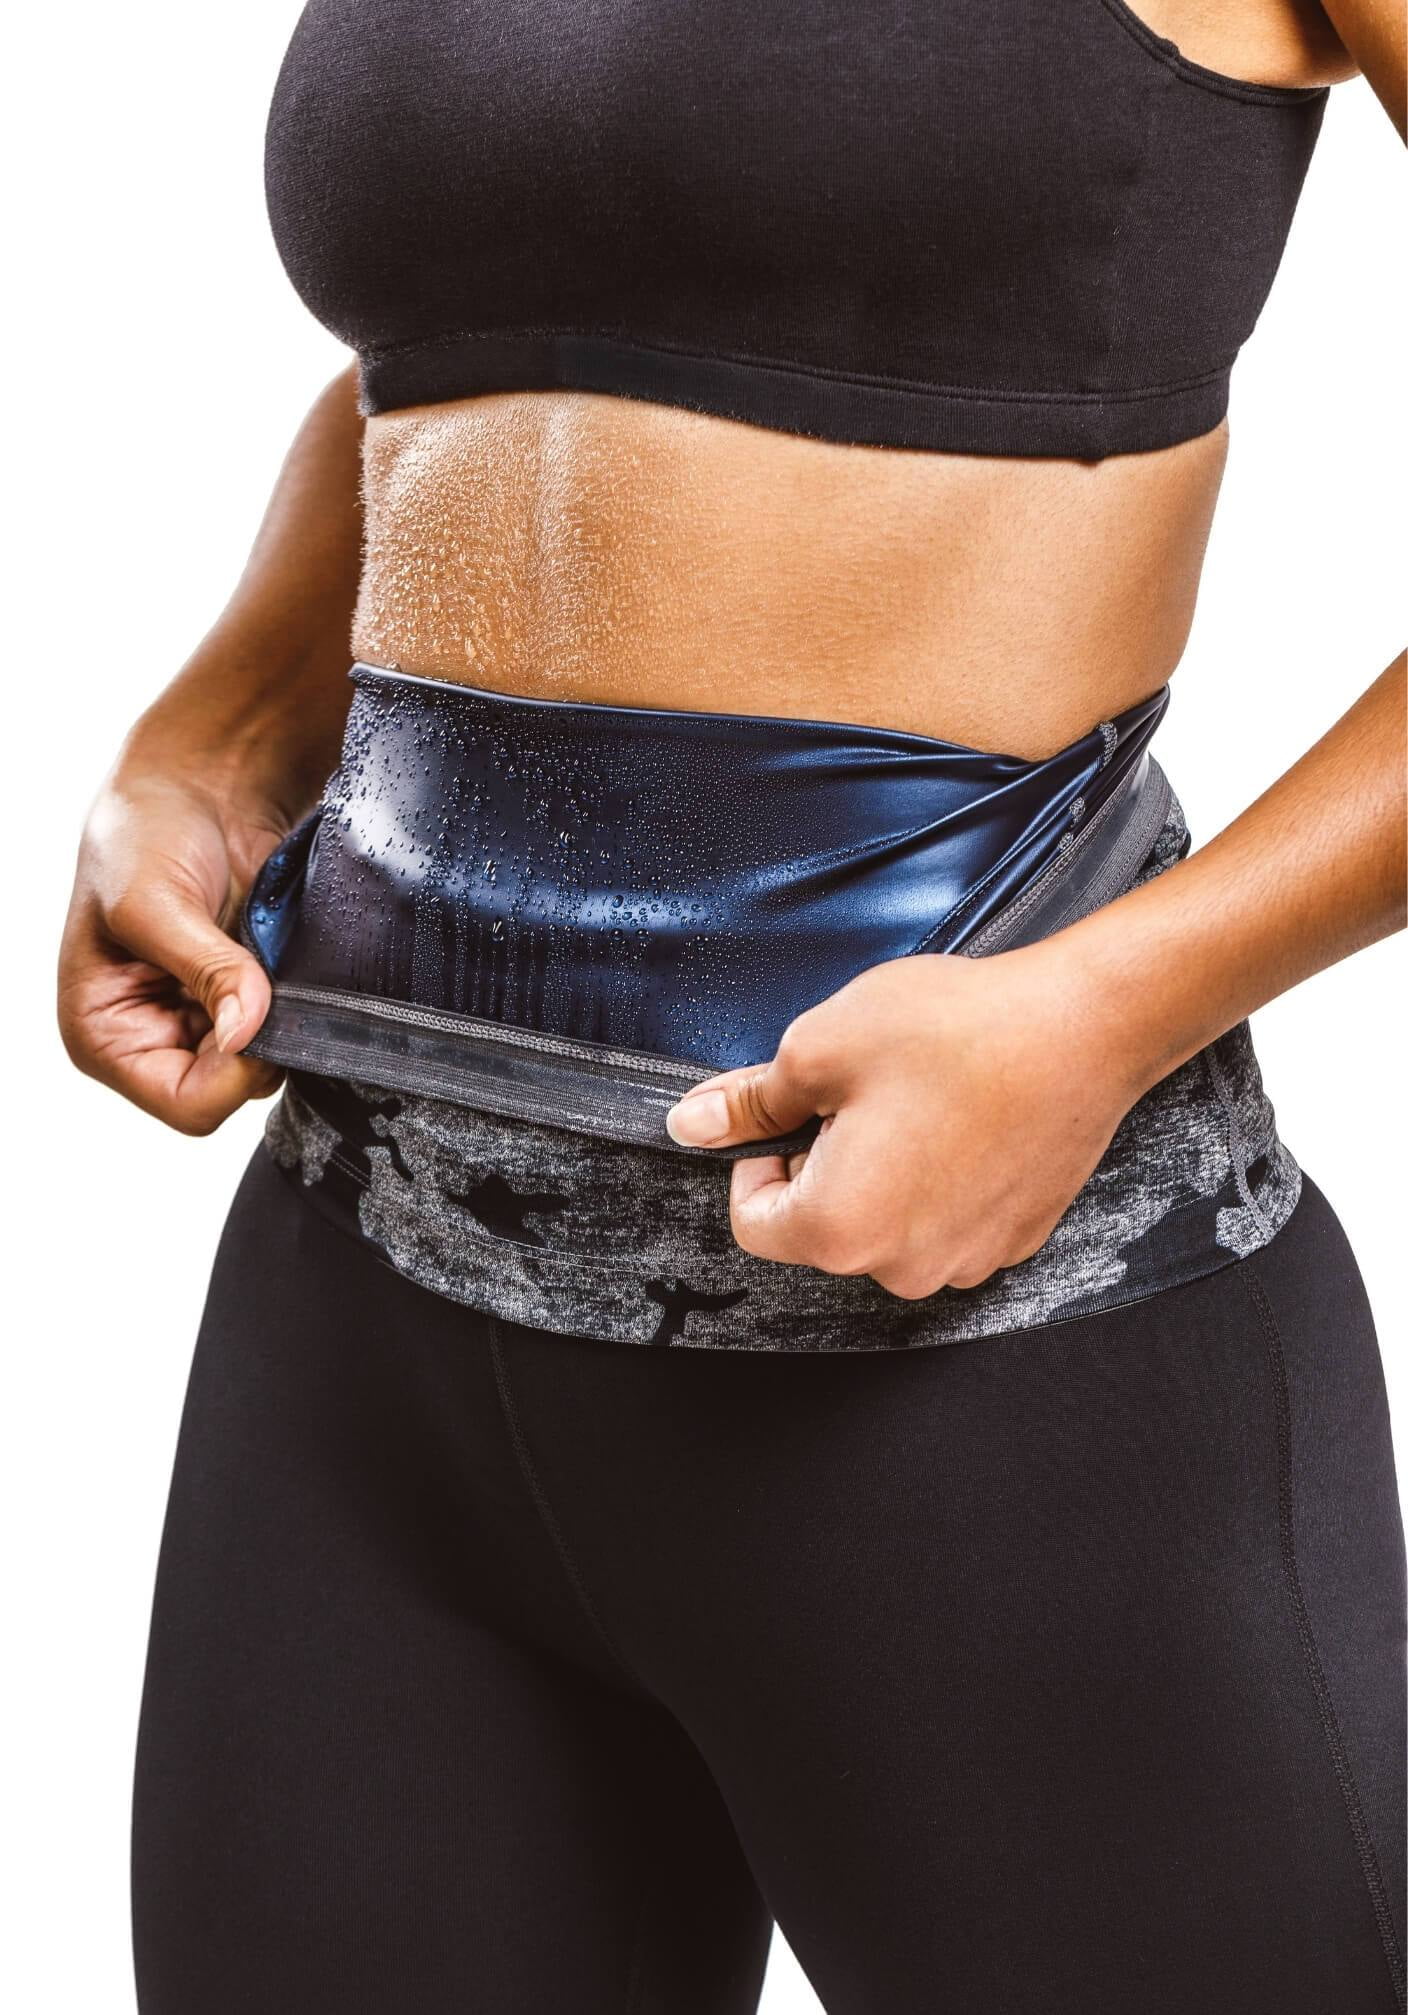  BODYSUNER Waist Trainer Trimmer Sweat Belt Band for Women Lower  Belly Fat Sauna Slimming Belt Suit Workout Gym Deep Blue,S/M : Sports &  Outdoors